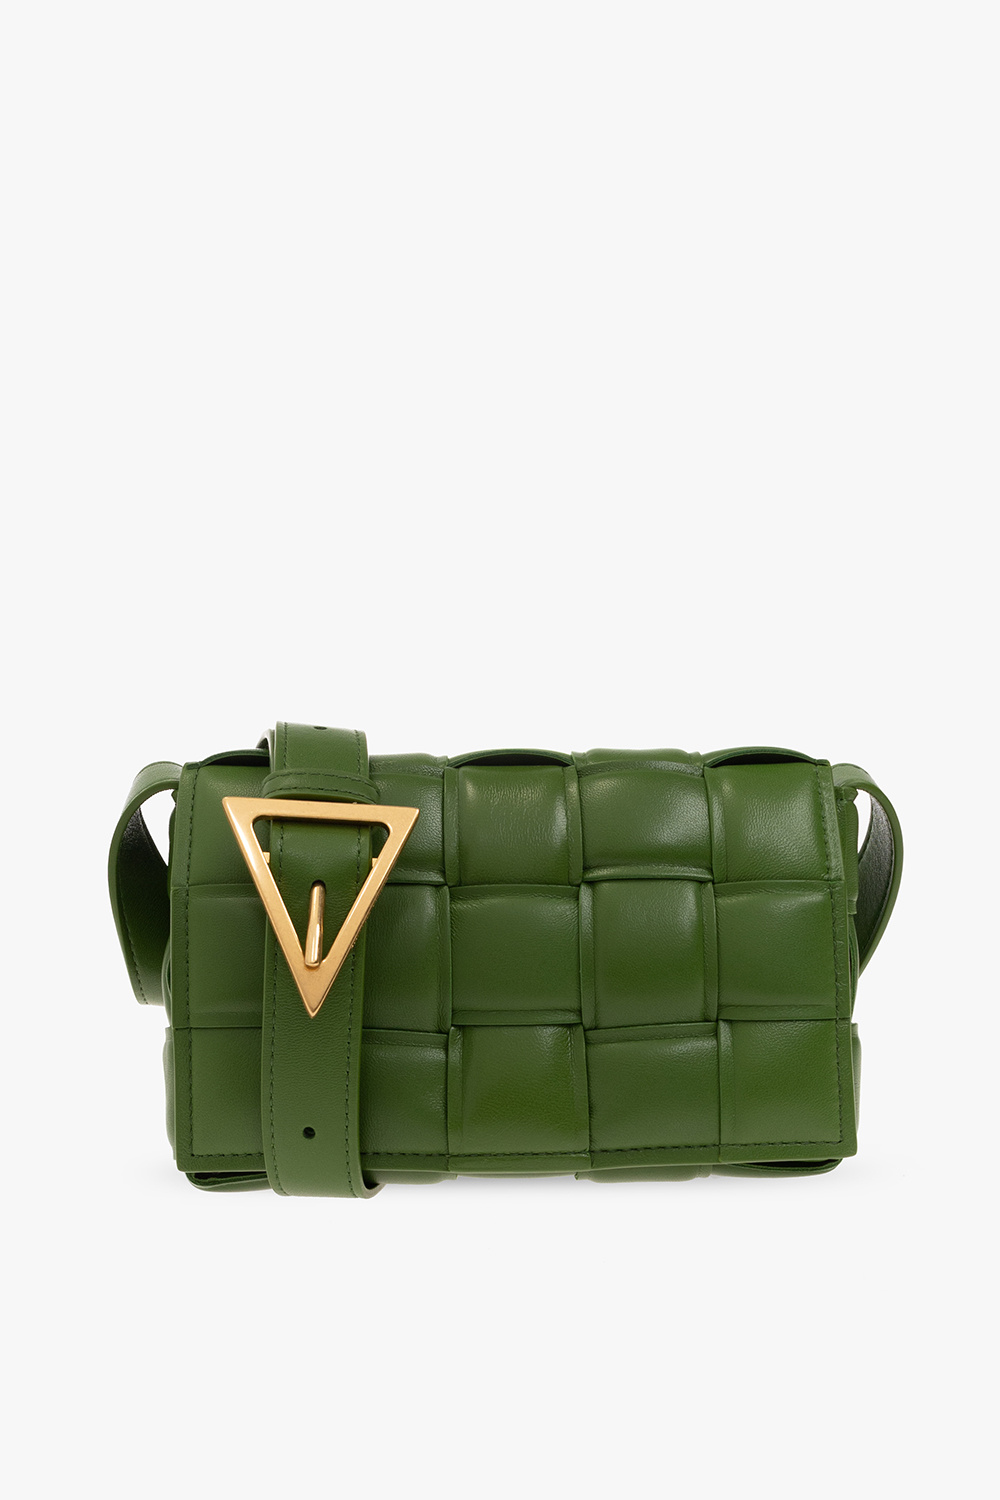 Louis Vuitton Montaigne clutch bag in black herringbone leather